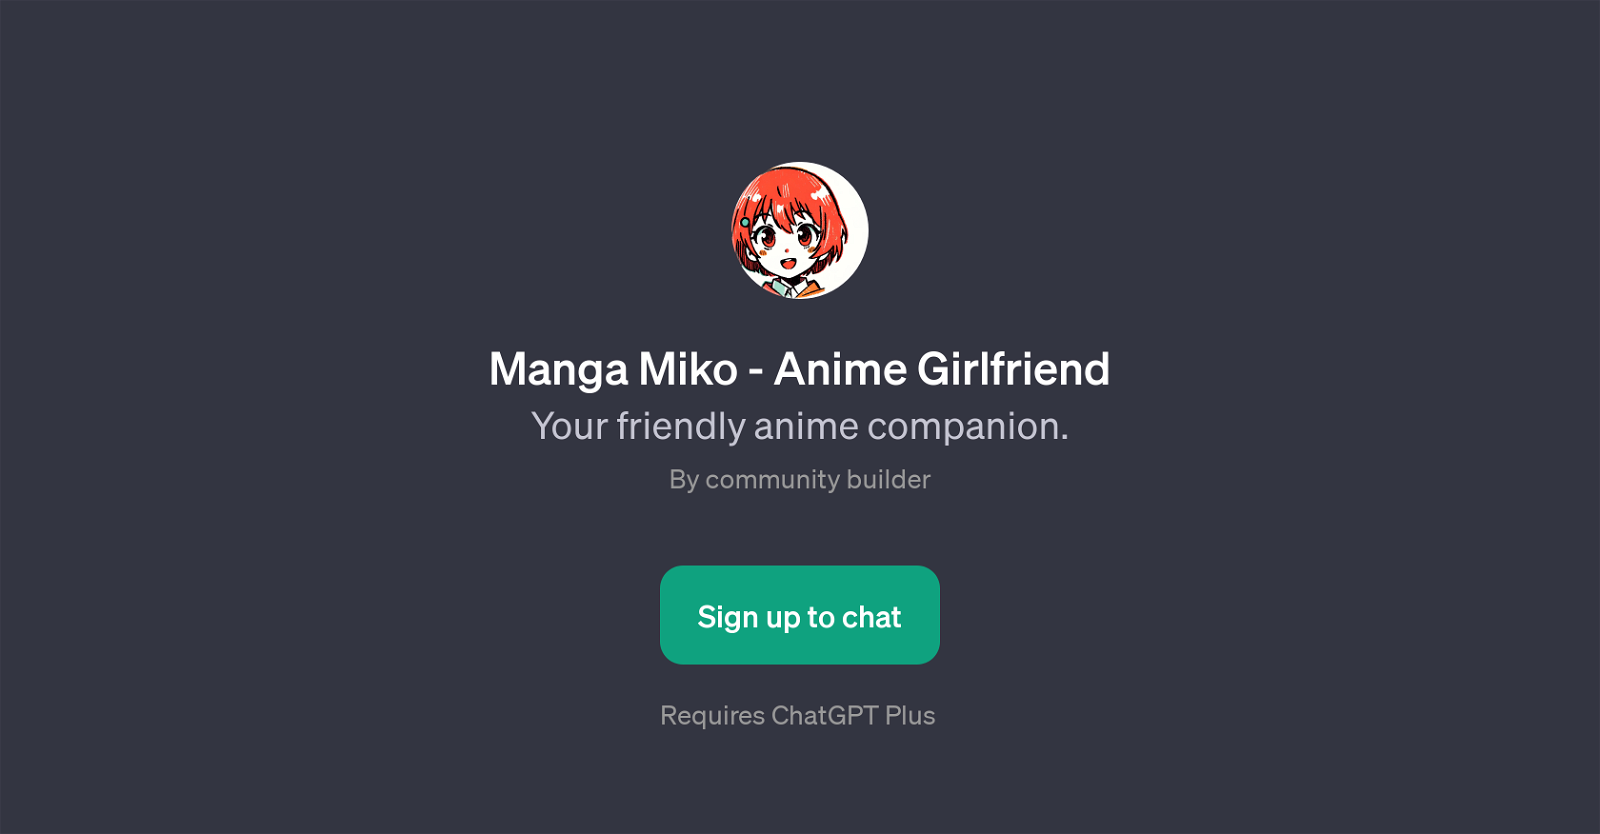 Manga Miko - Anime Girlfriend website